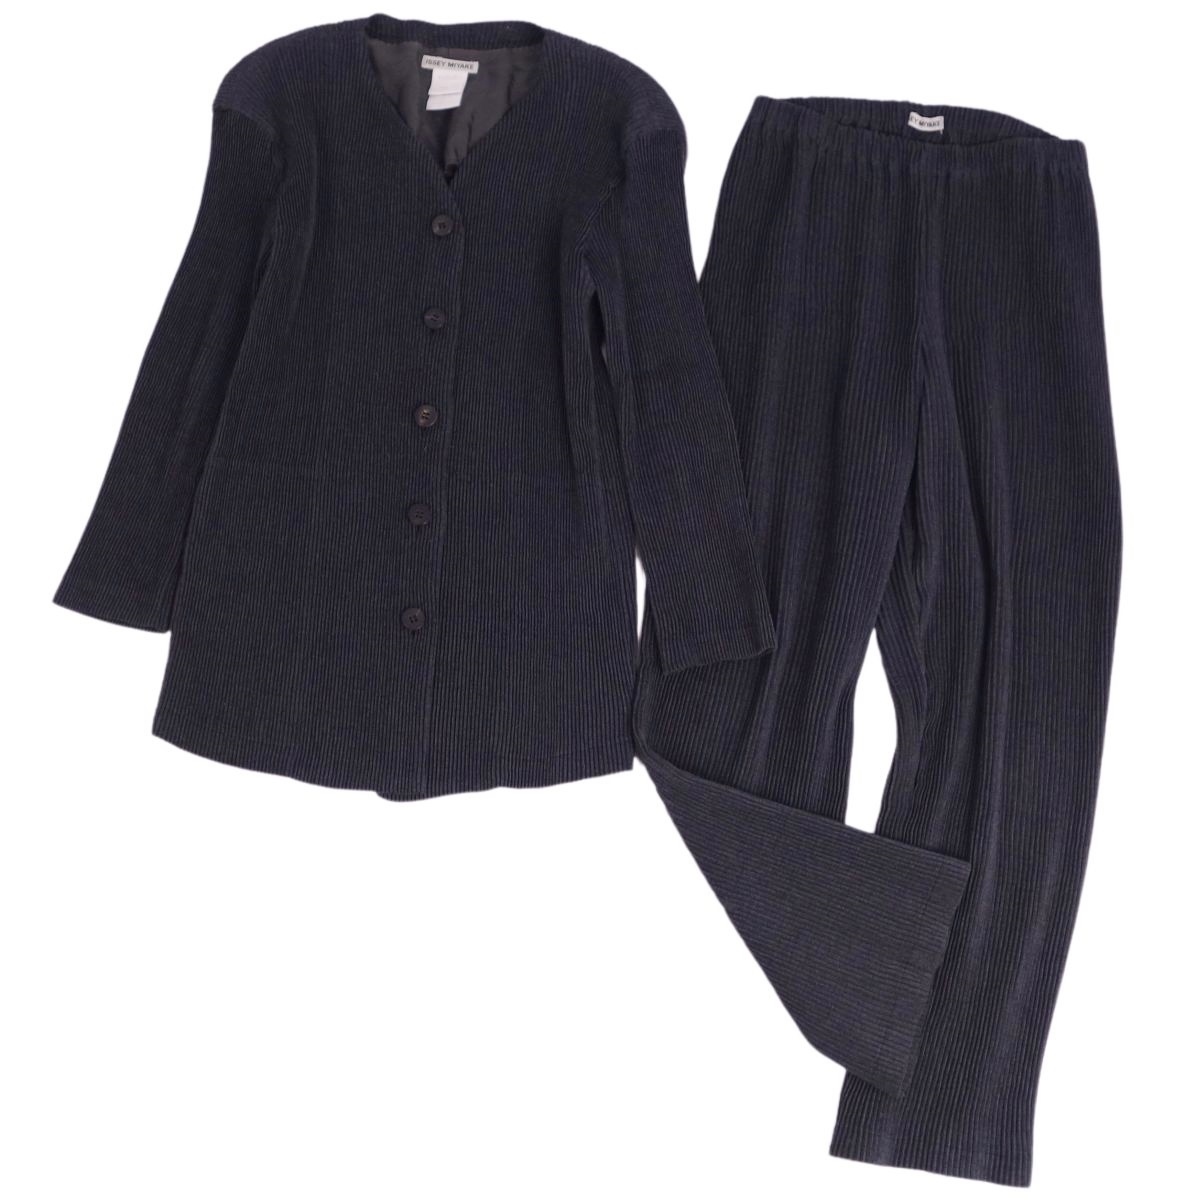  Issey Miyake ISSEY MIYAKE setup pants suit jacket pants pleat lady's M dark gray cg11mr-rm05f07160